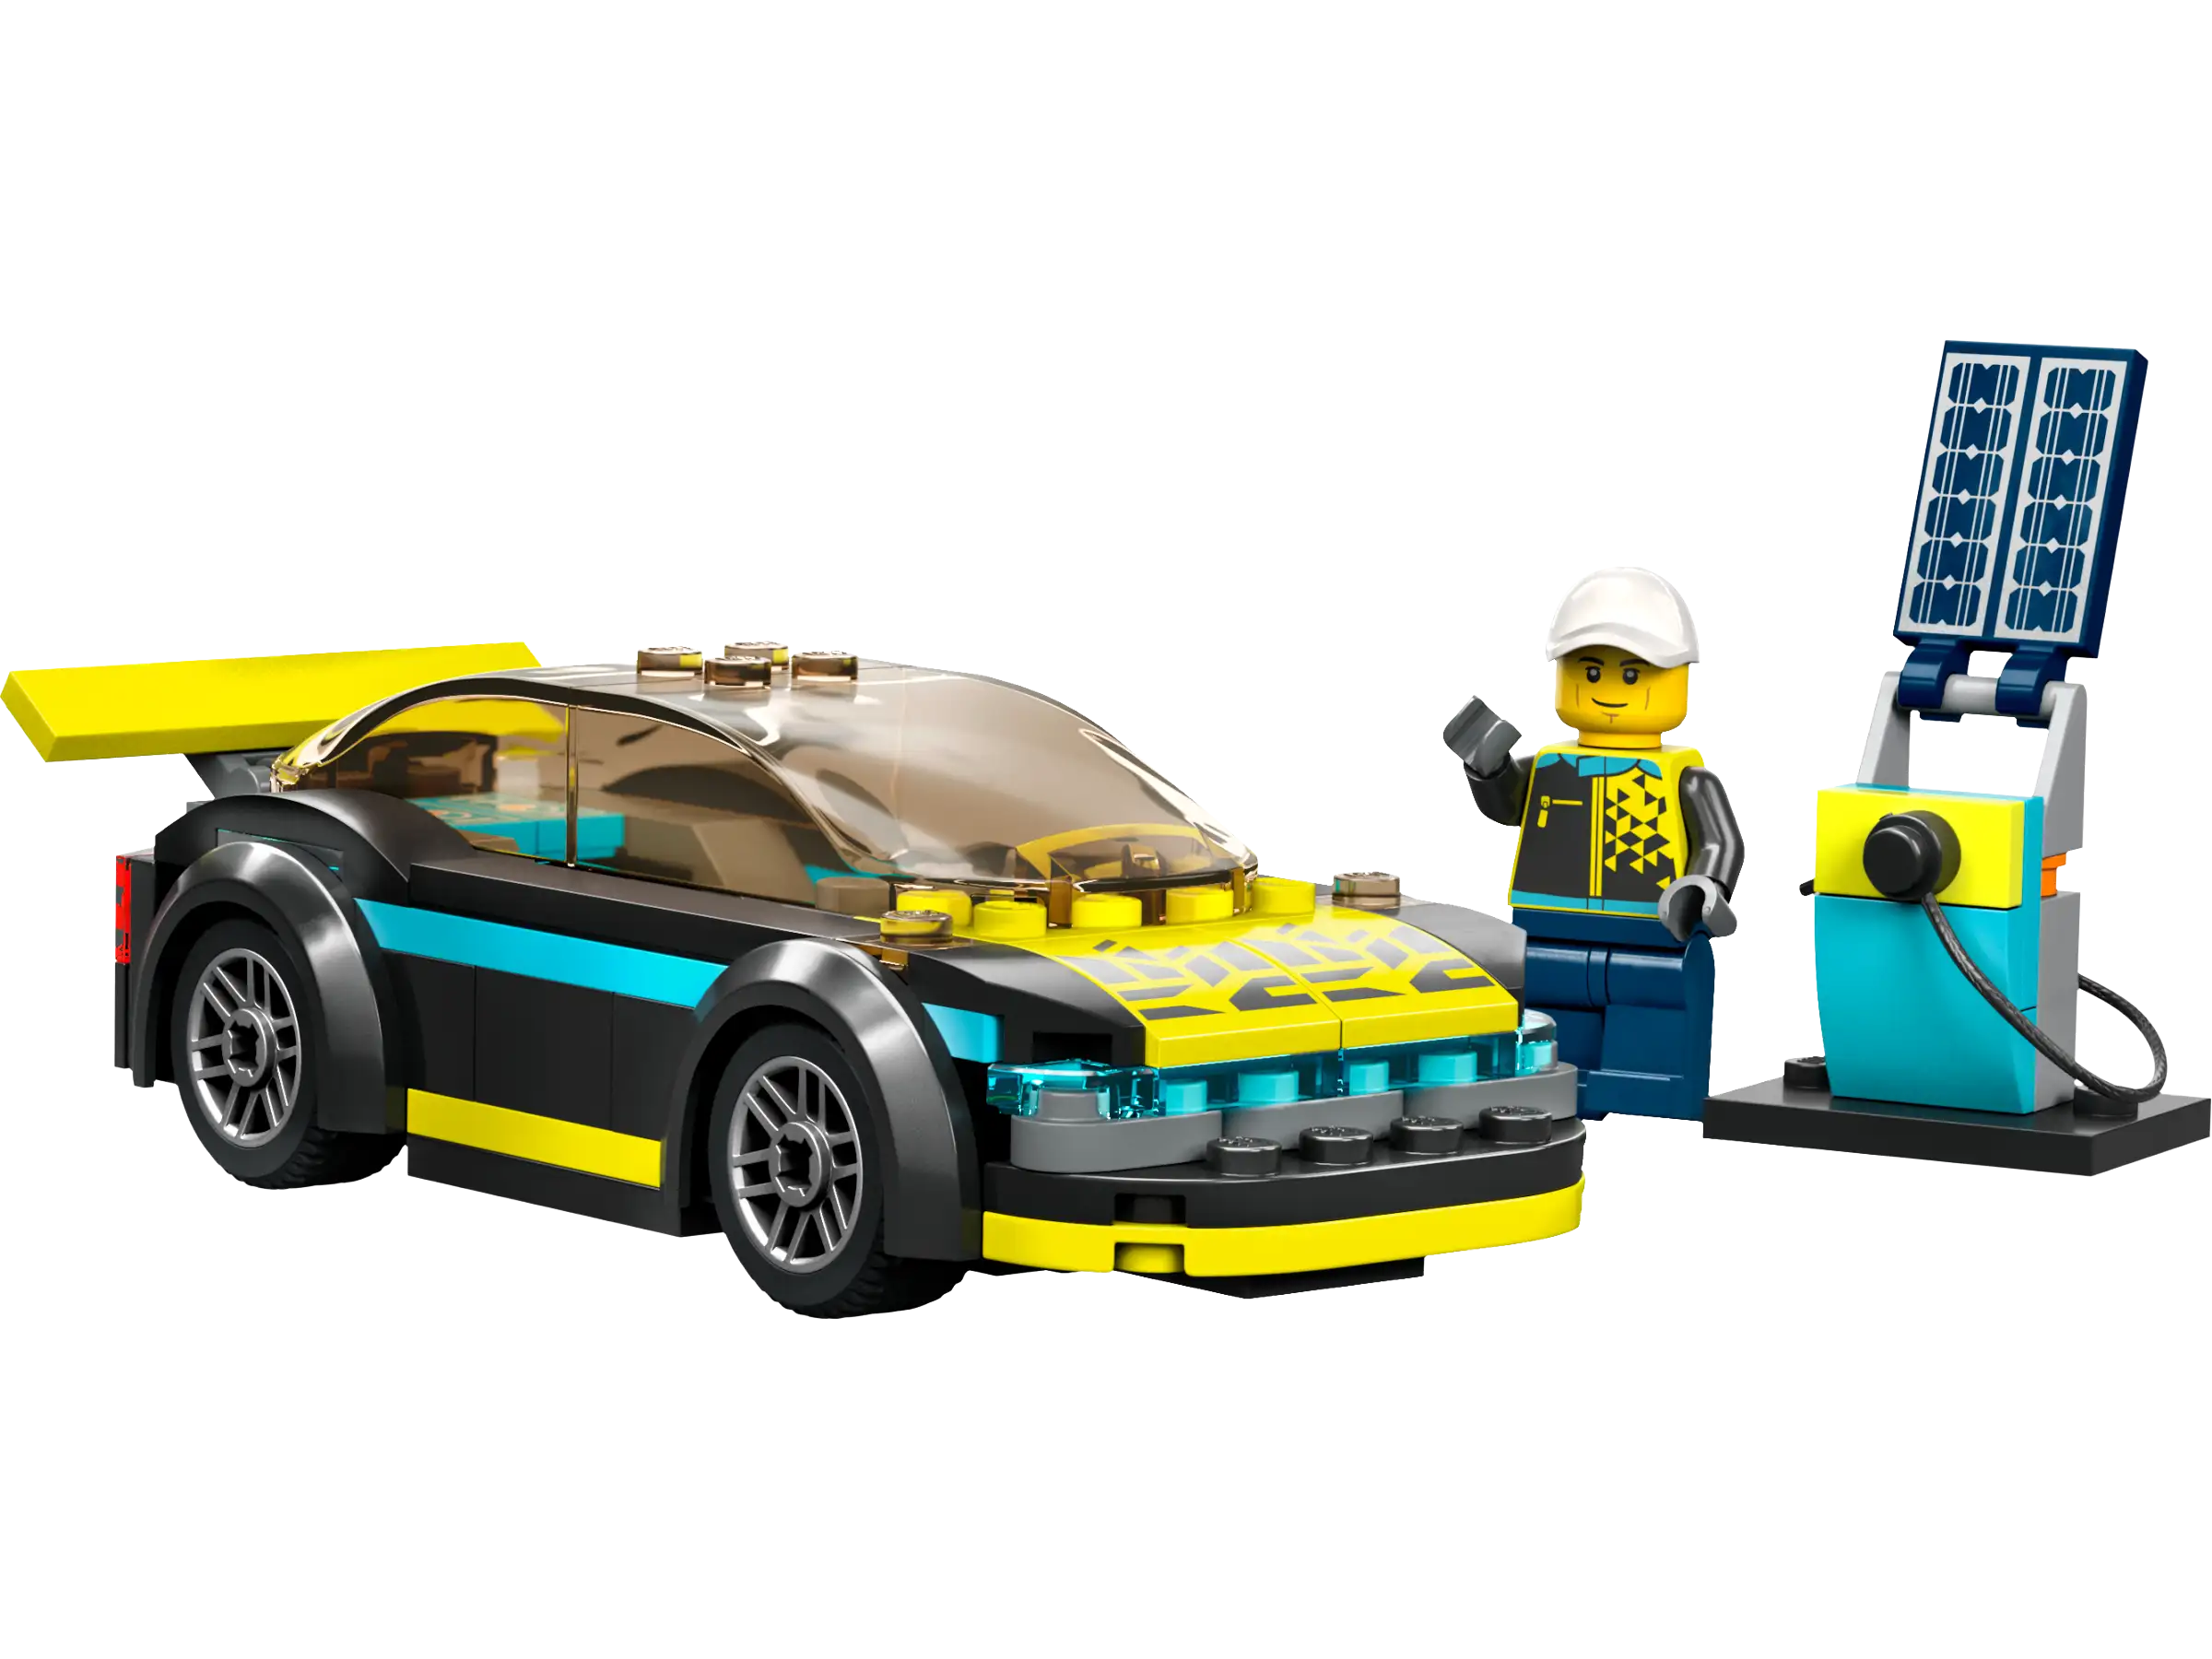 Lego - The electric sports car